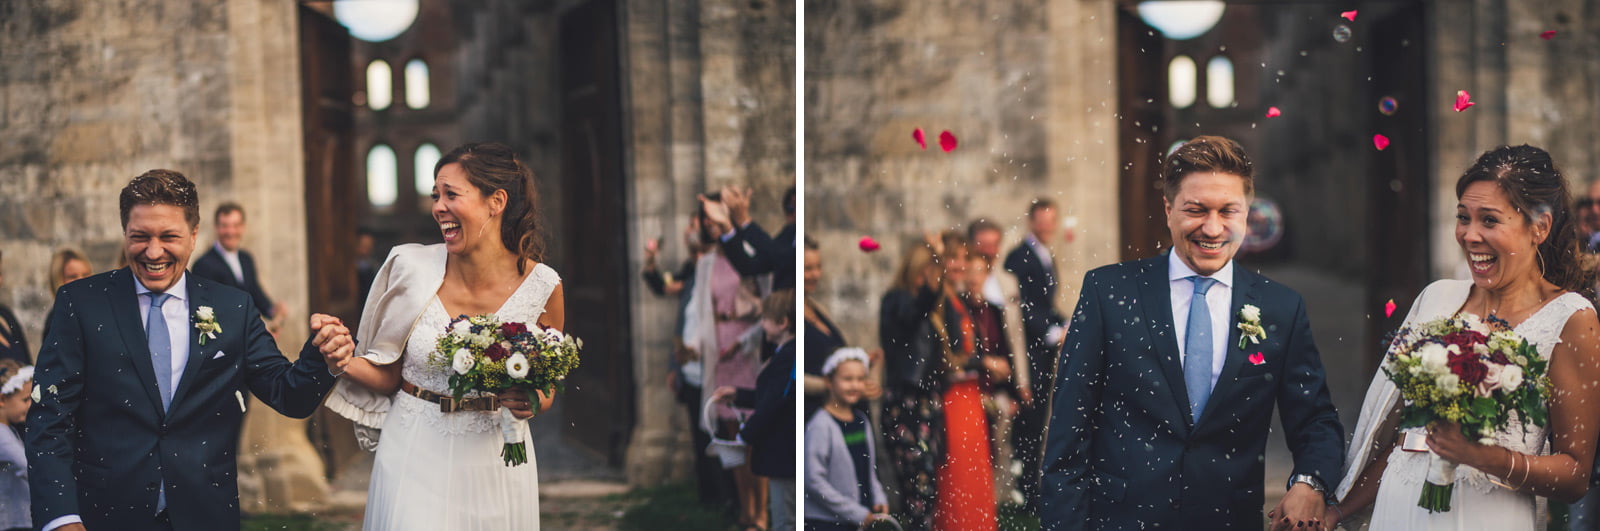 060-wedding-tuscany-san-galgano-siena-photographer